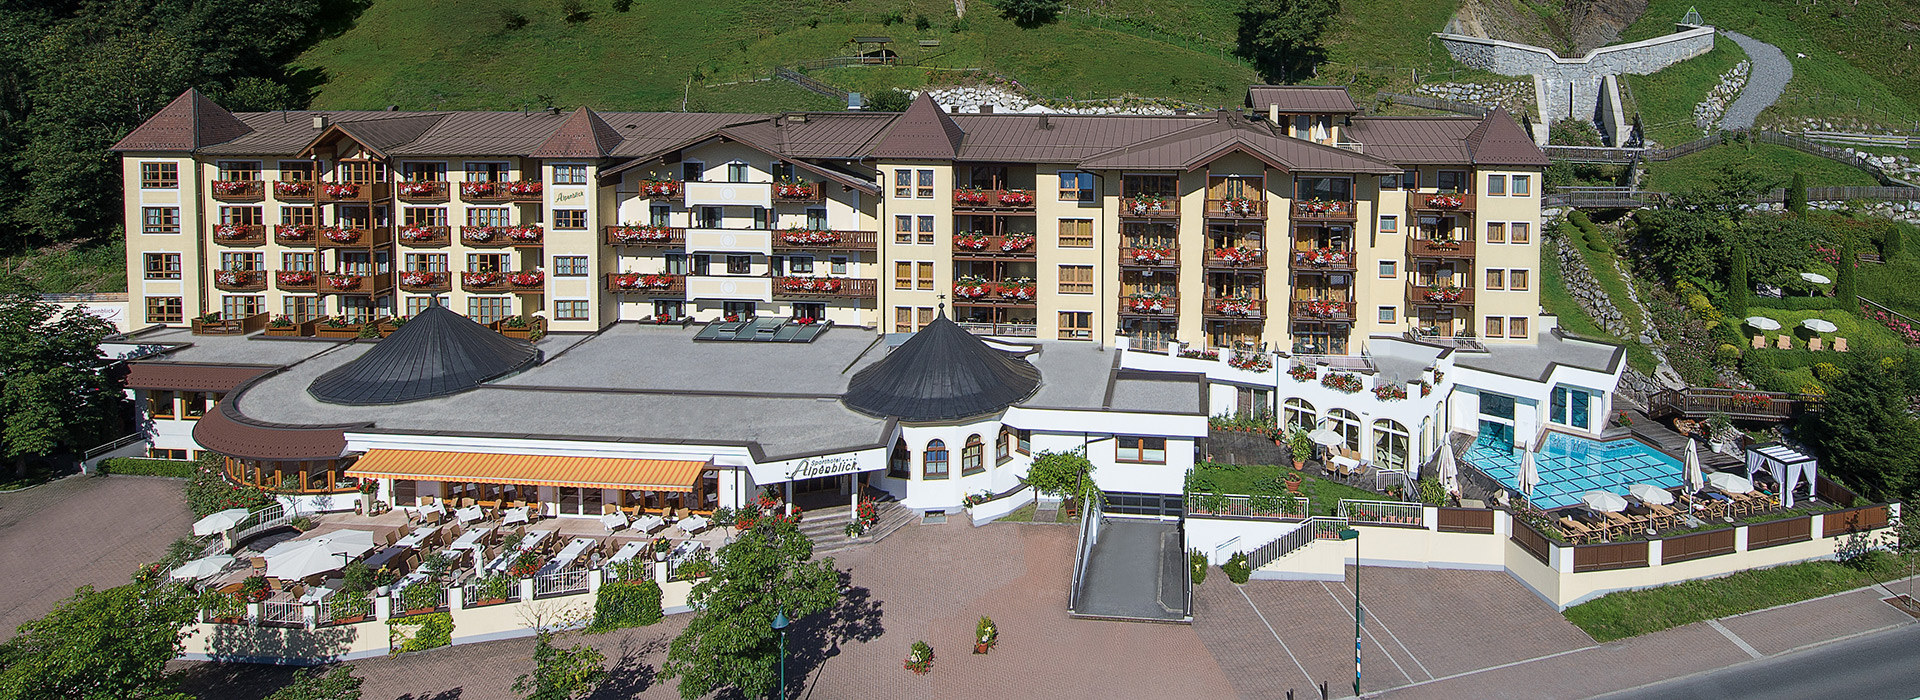 Sporthotel Alpenblick